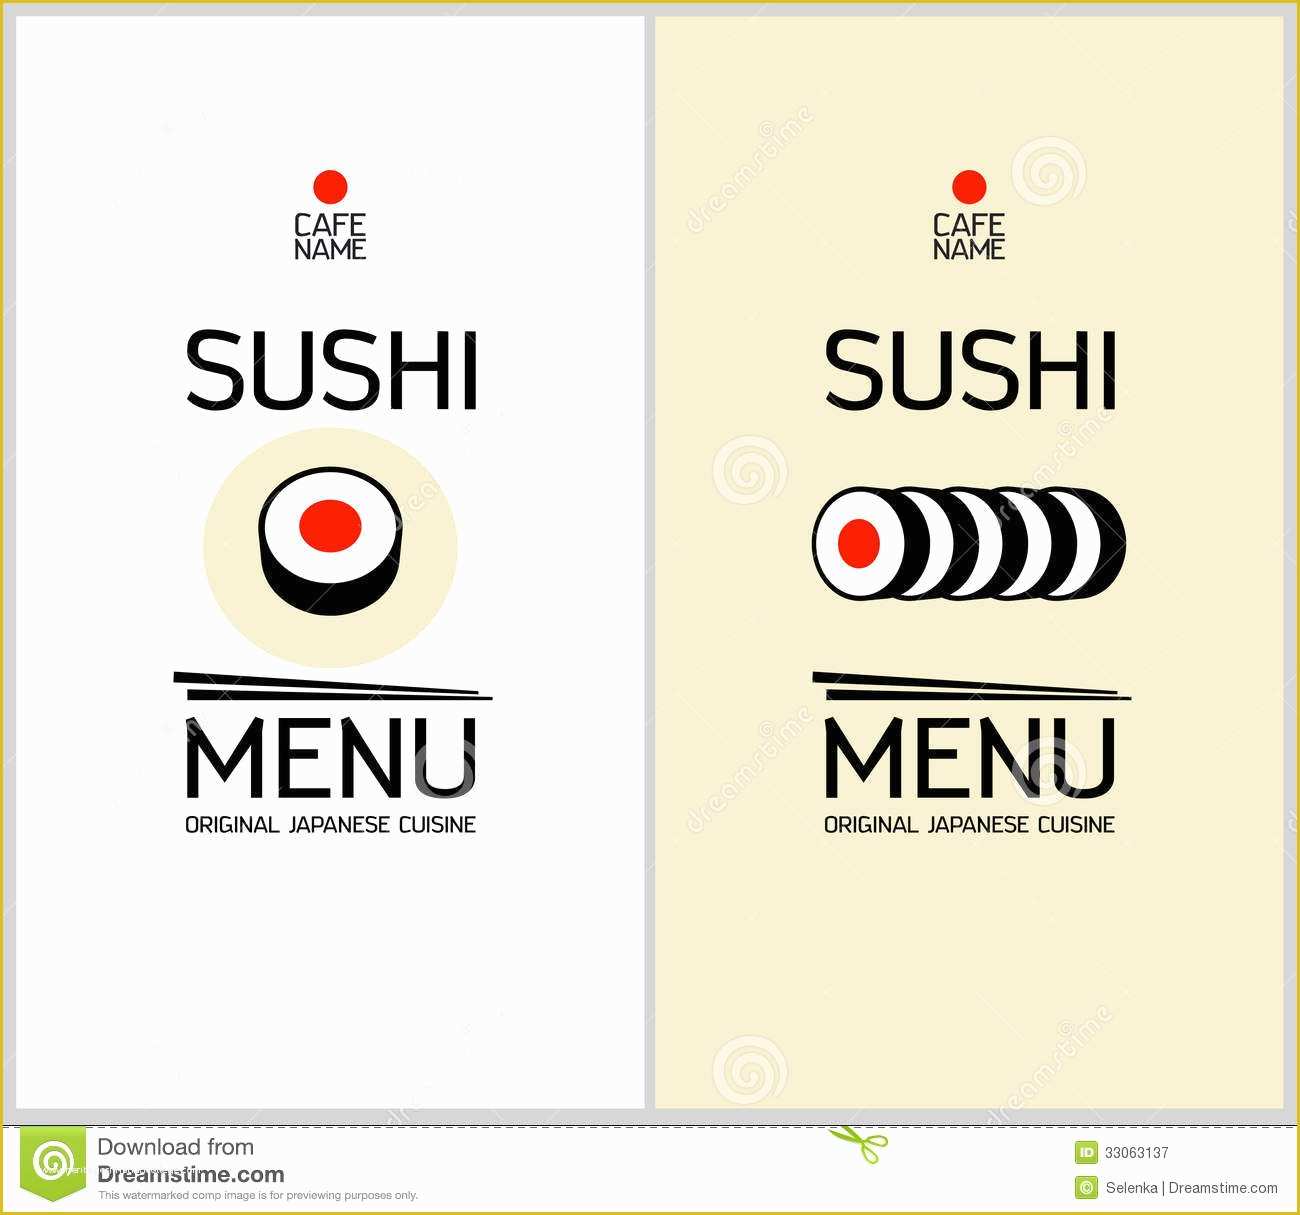 Sushi Menu Template Free Download Of Sushi Menu Design Template Royalty Free Stock Graphy